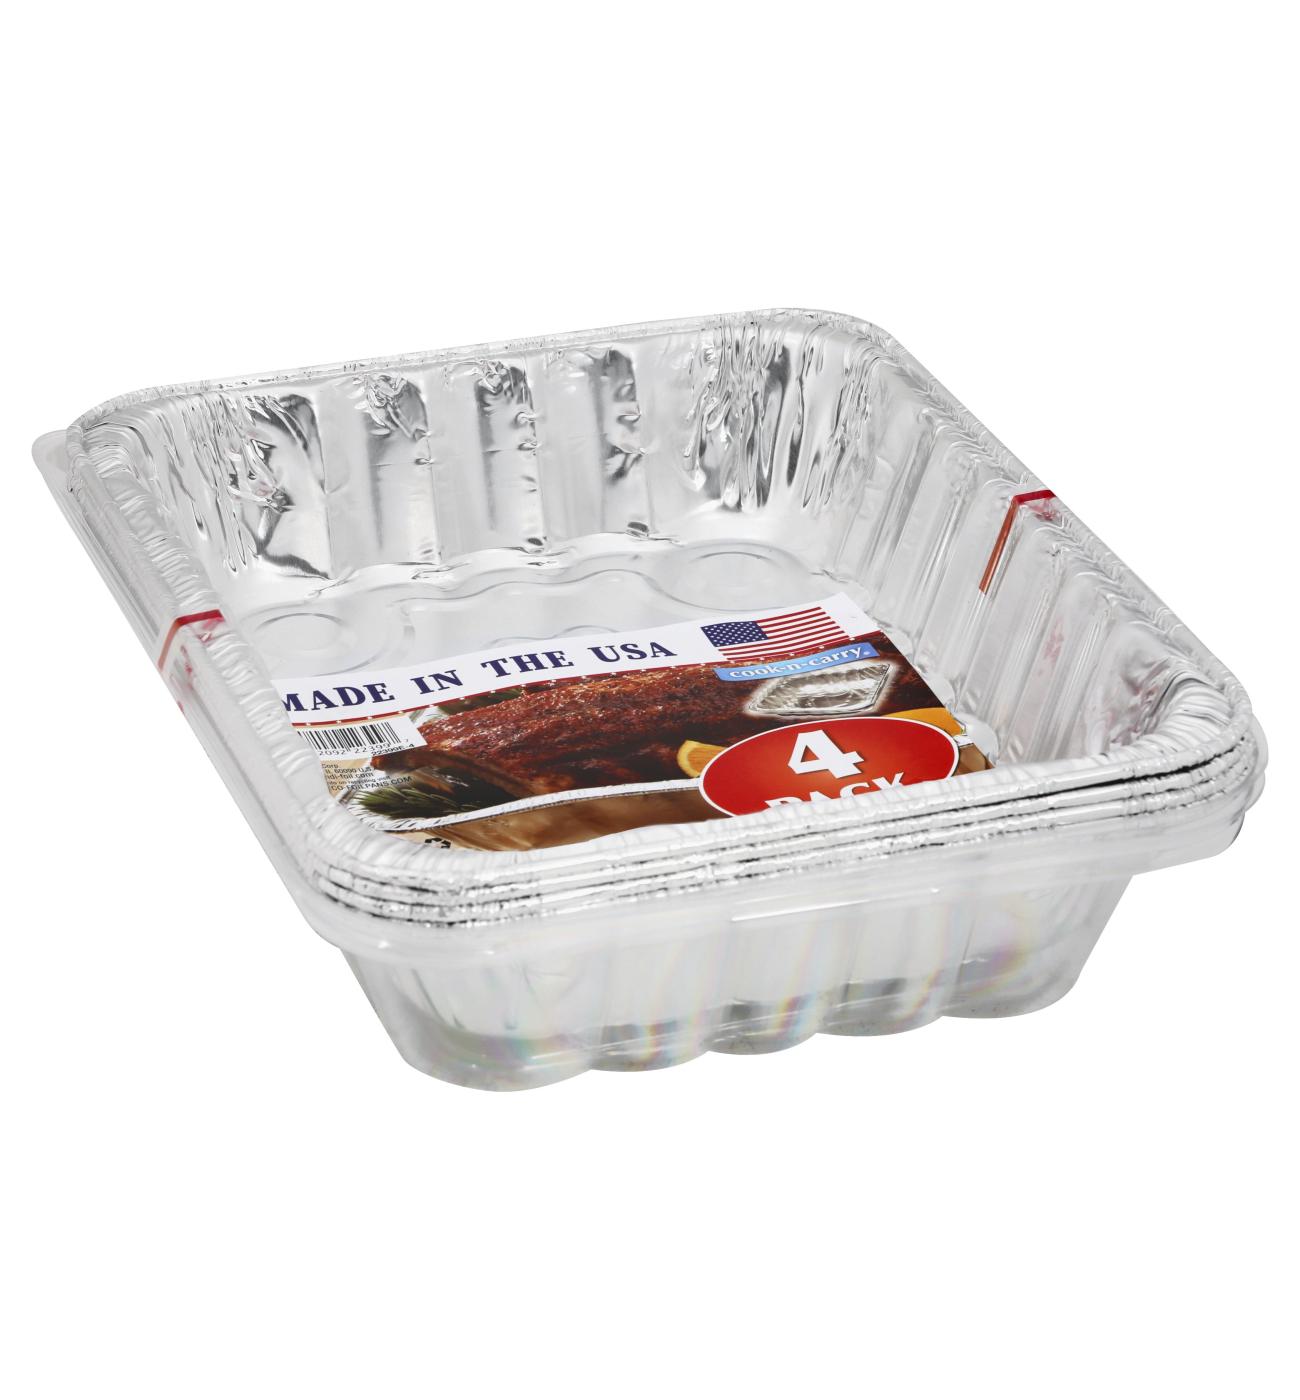 Handi-foil® Cook-n-Carry Roaster/Baker Pans & Lids - Silver, 4 pk